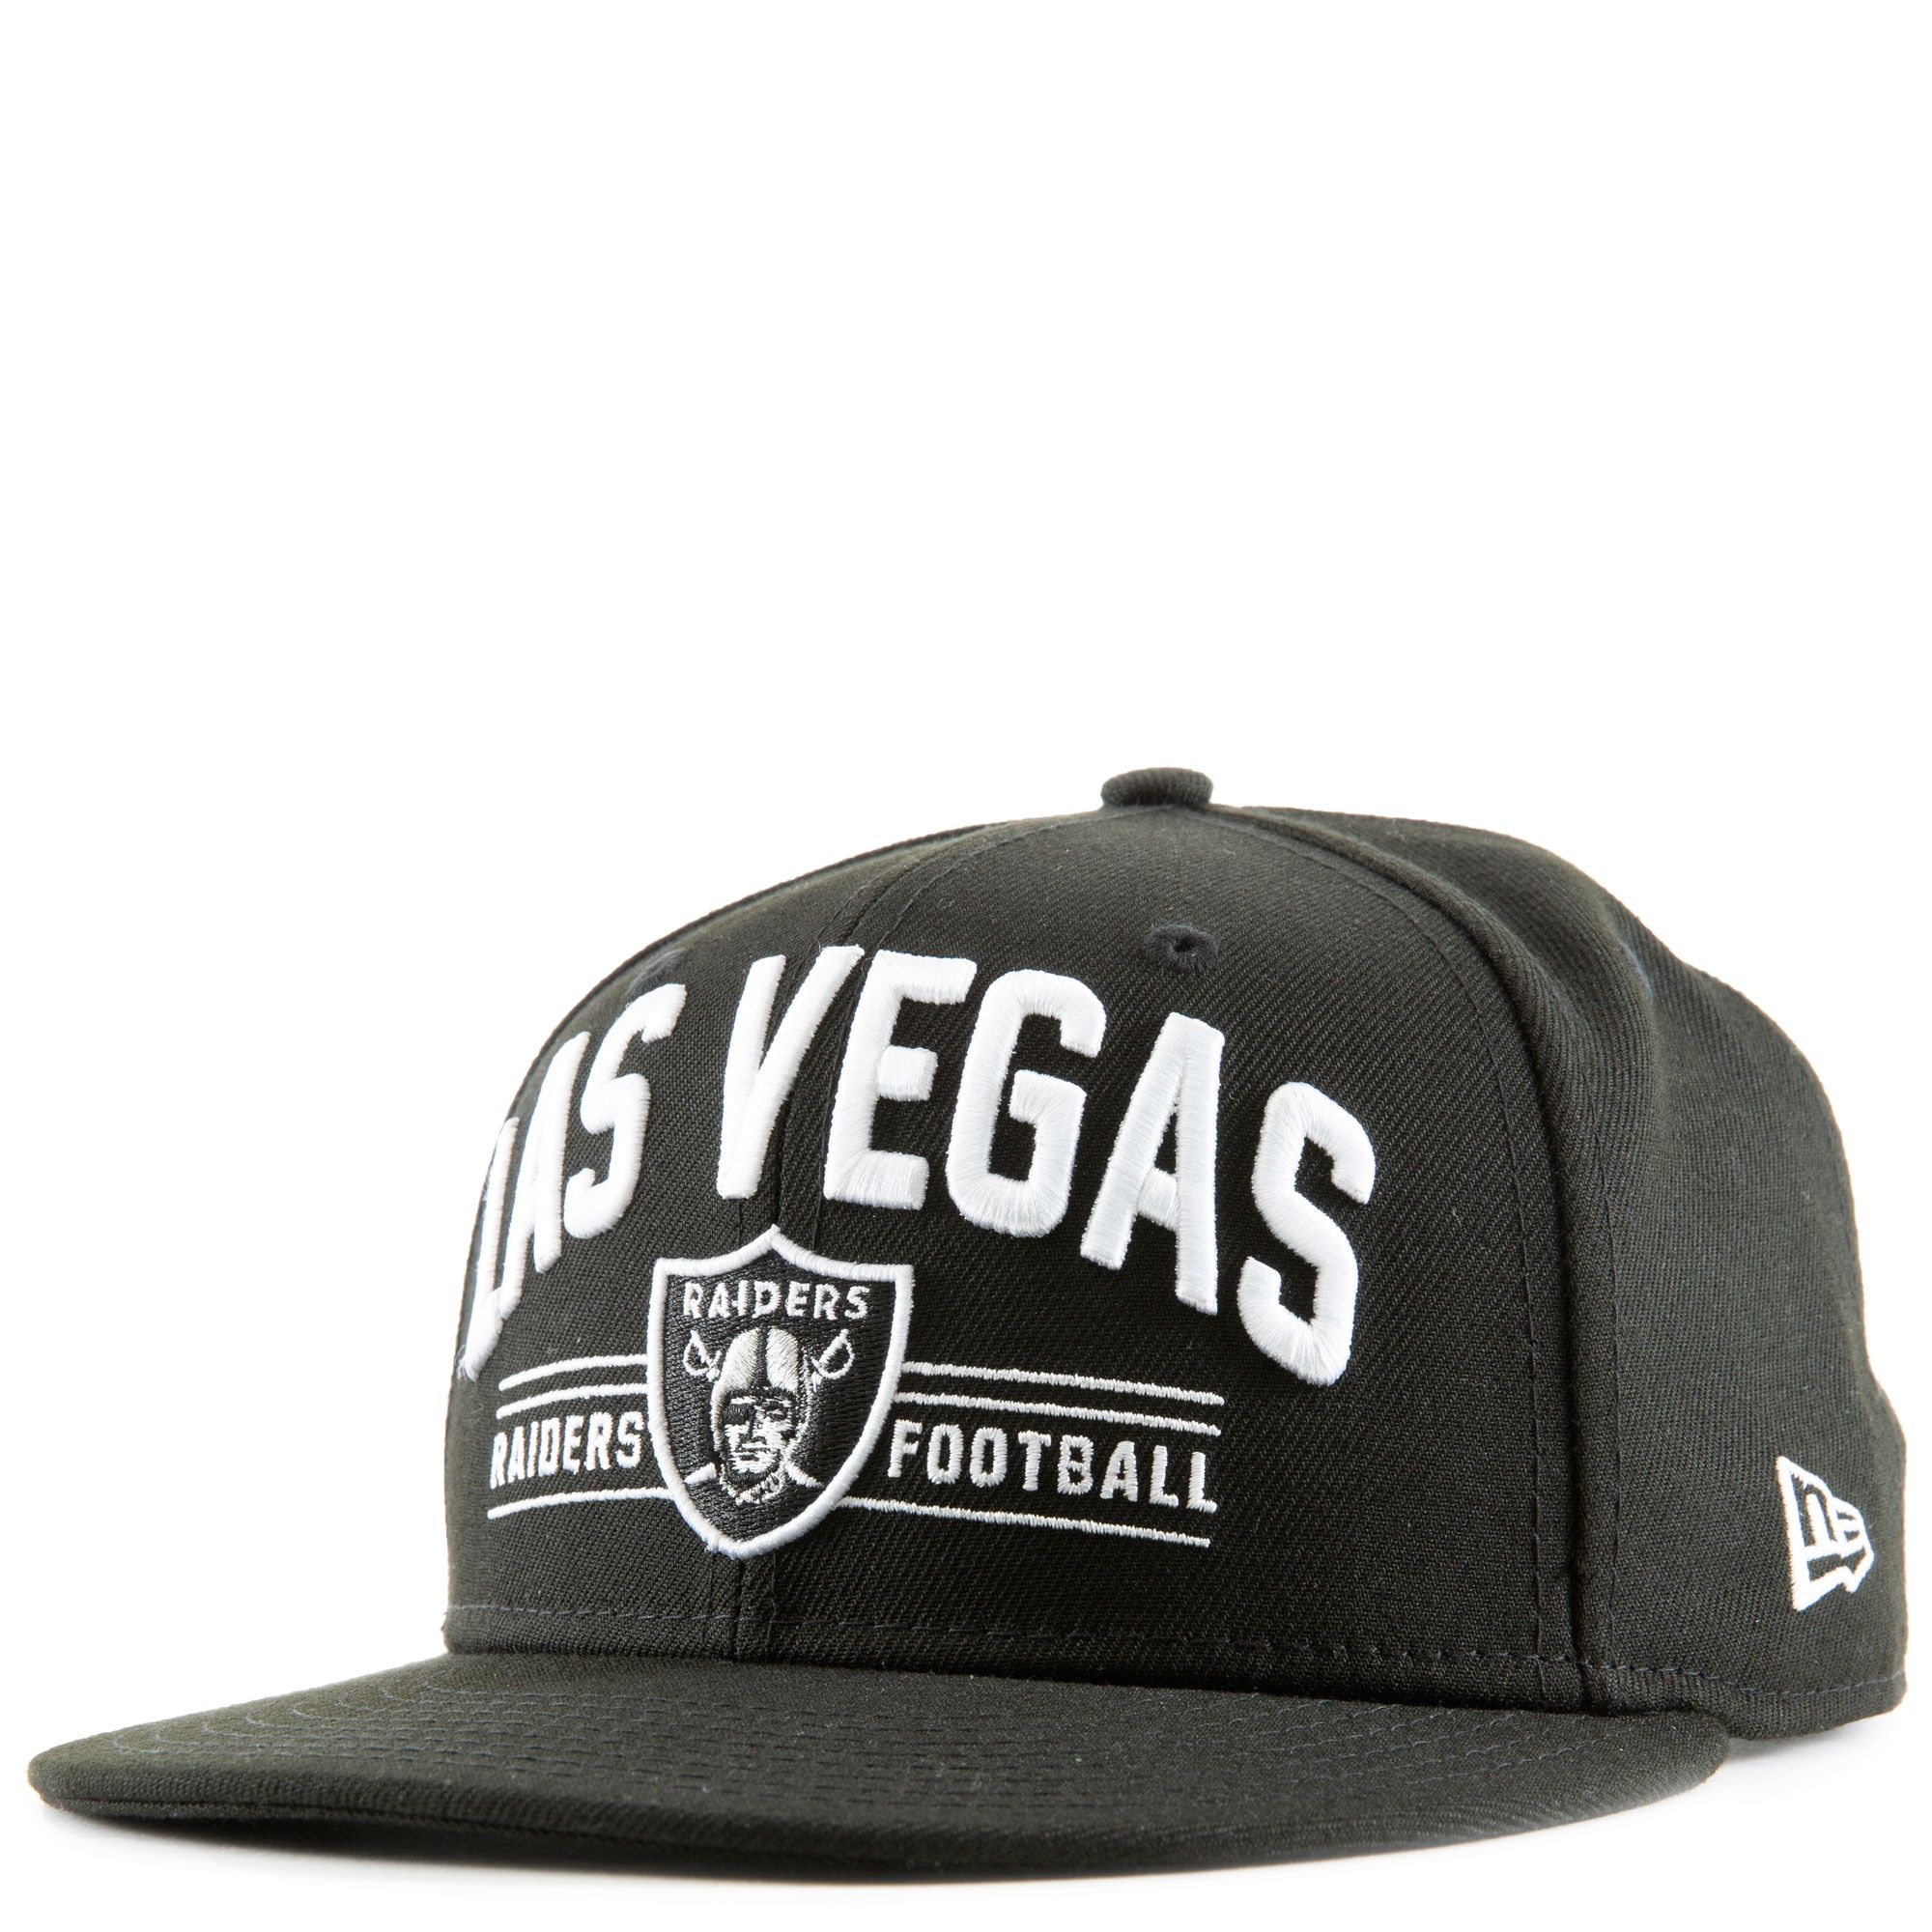  Las Vegas Raiders Acrylic Cap Logo Display Case - Football Hat  Free Standing Display Cases : Sports & Outdoors